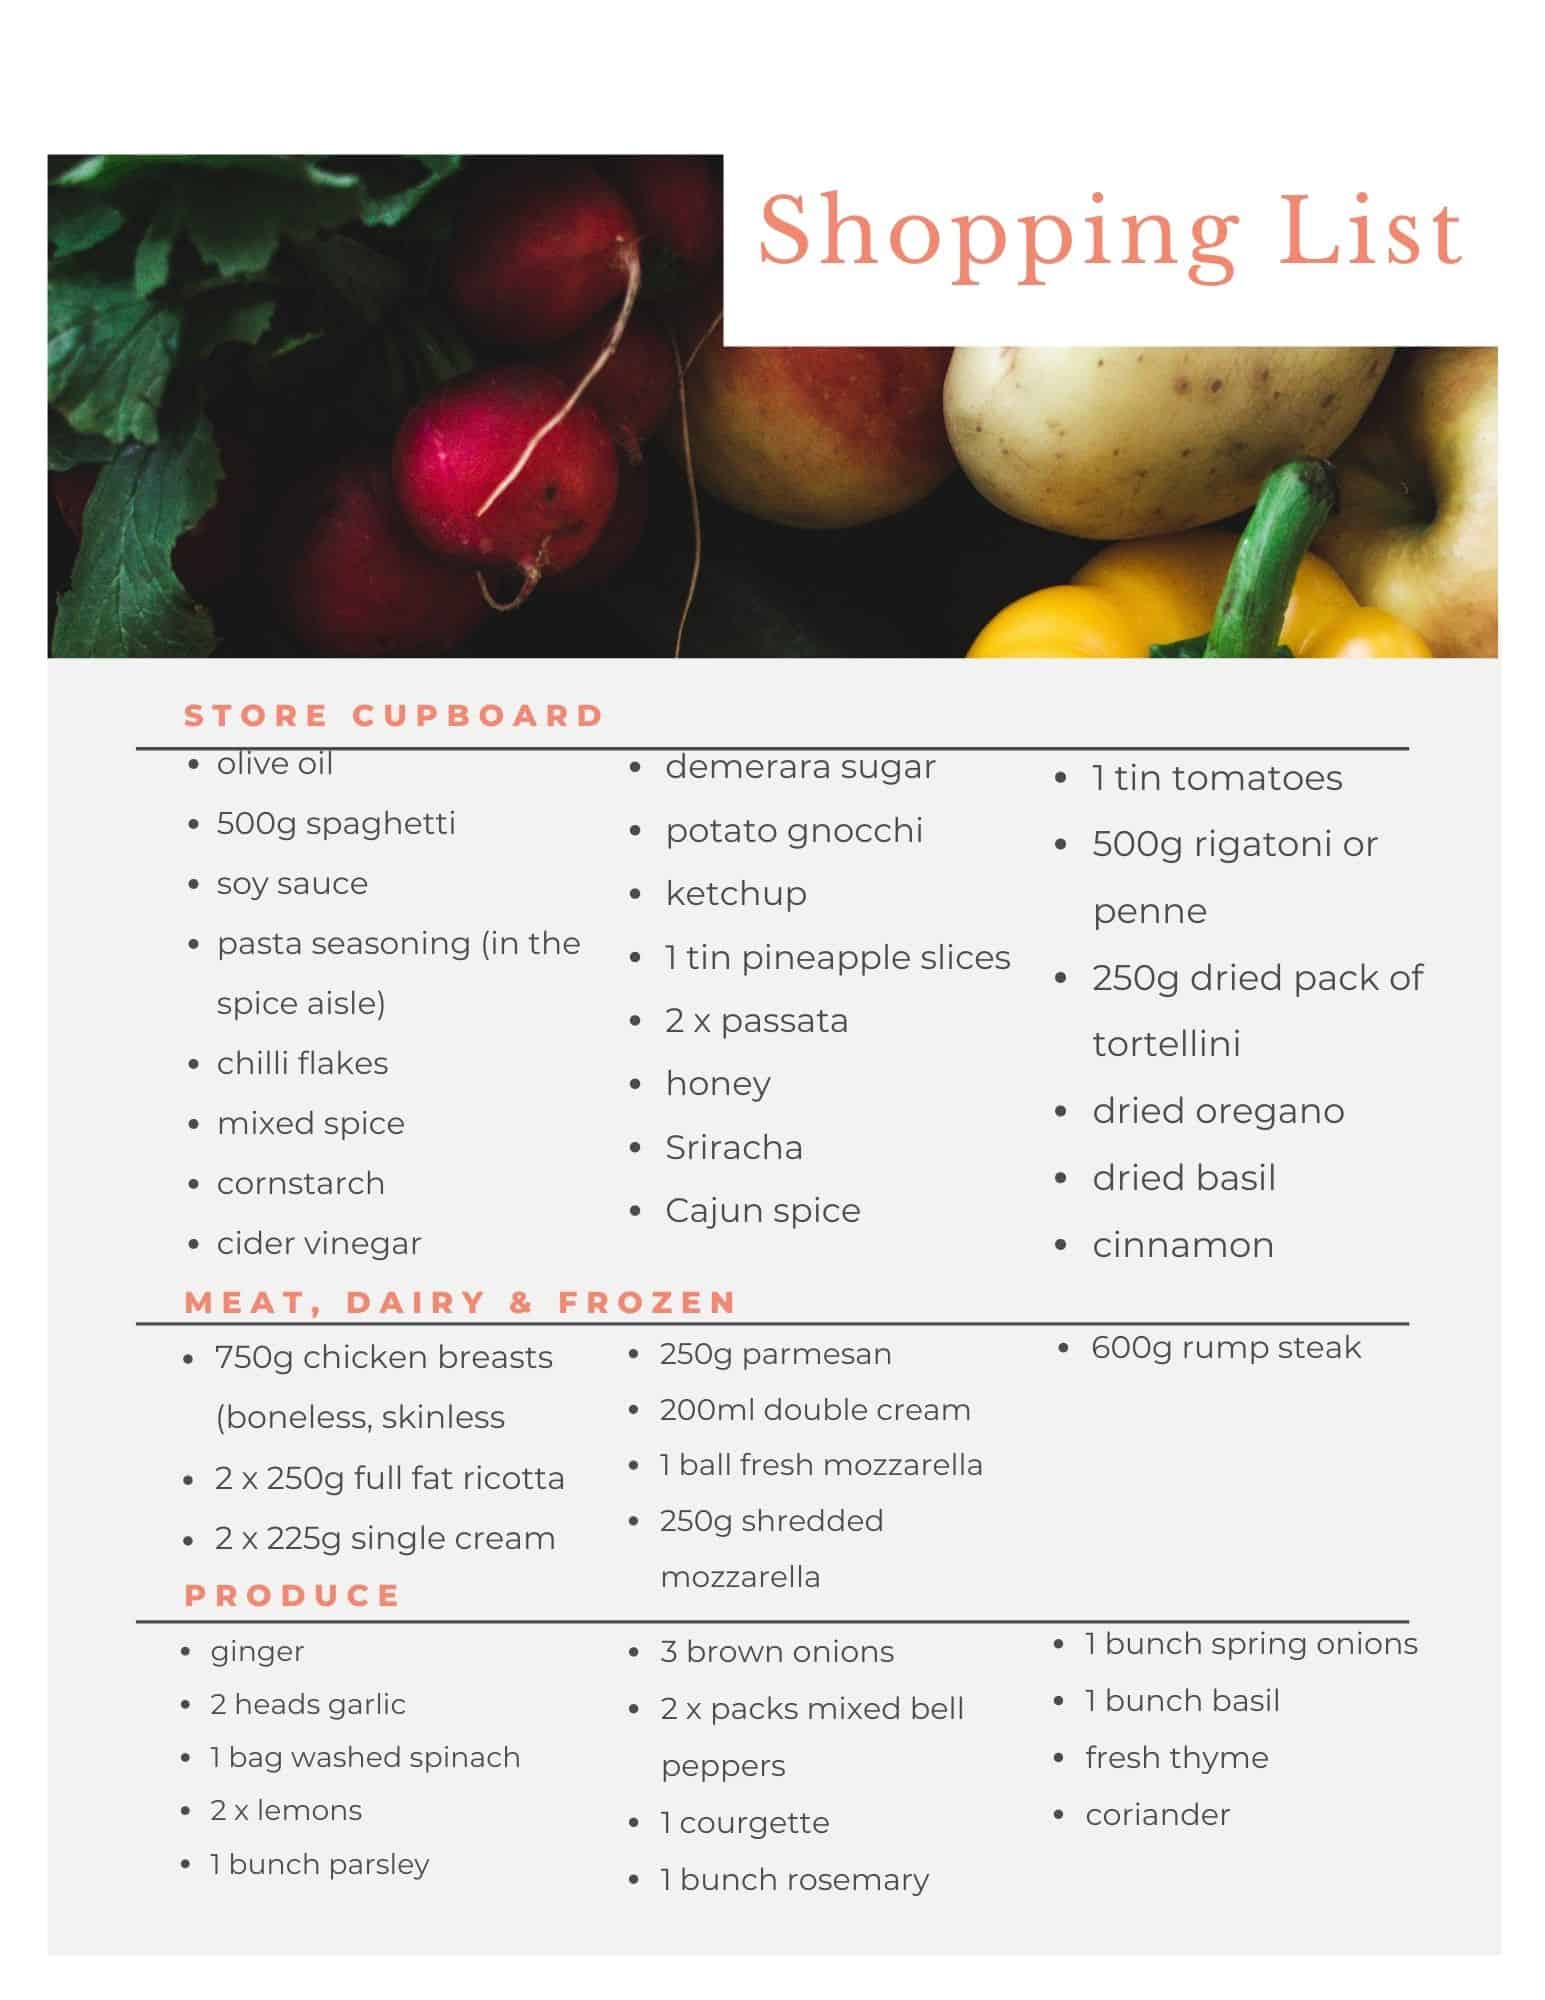 Aldi budget meal plan shopping list.